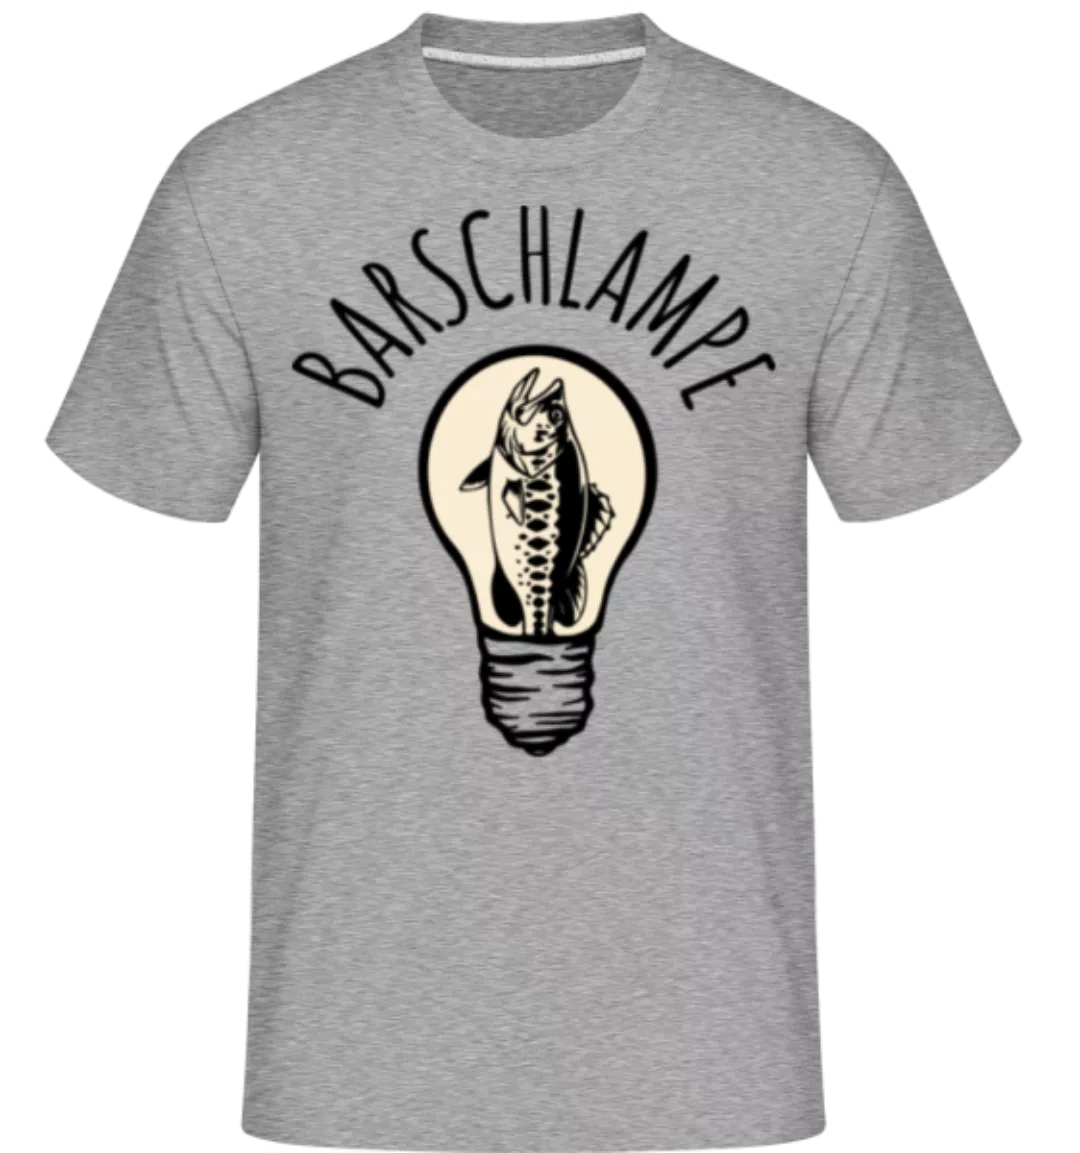 Barschlampe · Shirtinator Männer T-Shirt günstig online kaufen